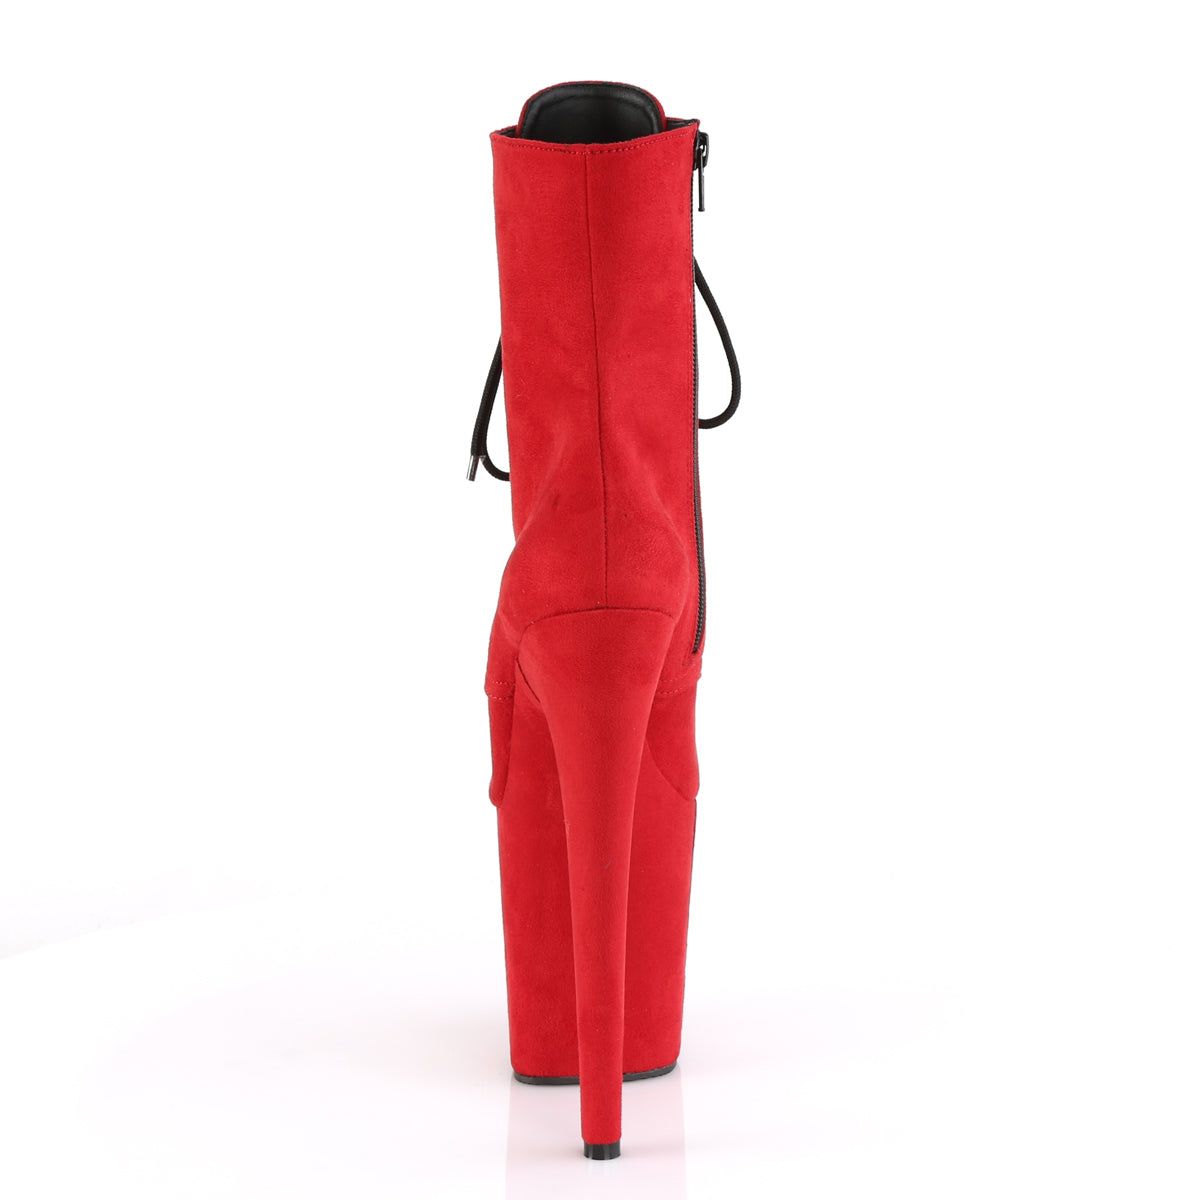 FLAMINGO-1020FS Pleaser 8 Inch Heel Red Pole Dancer Platform-Pleaser- Sexy Shoes Fetish Footwear